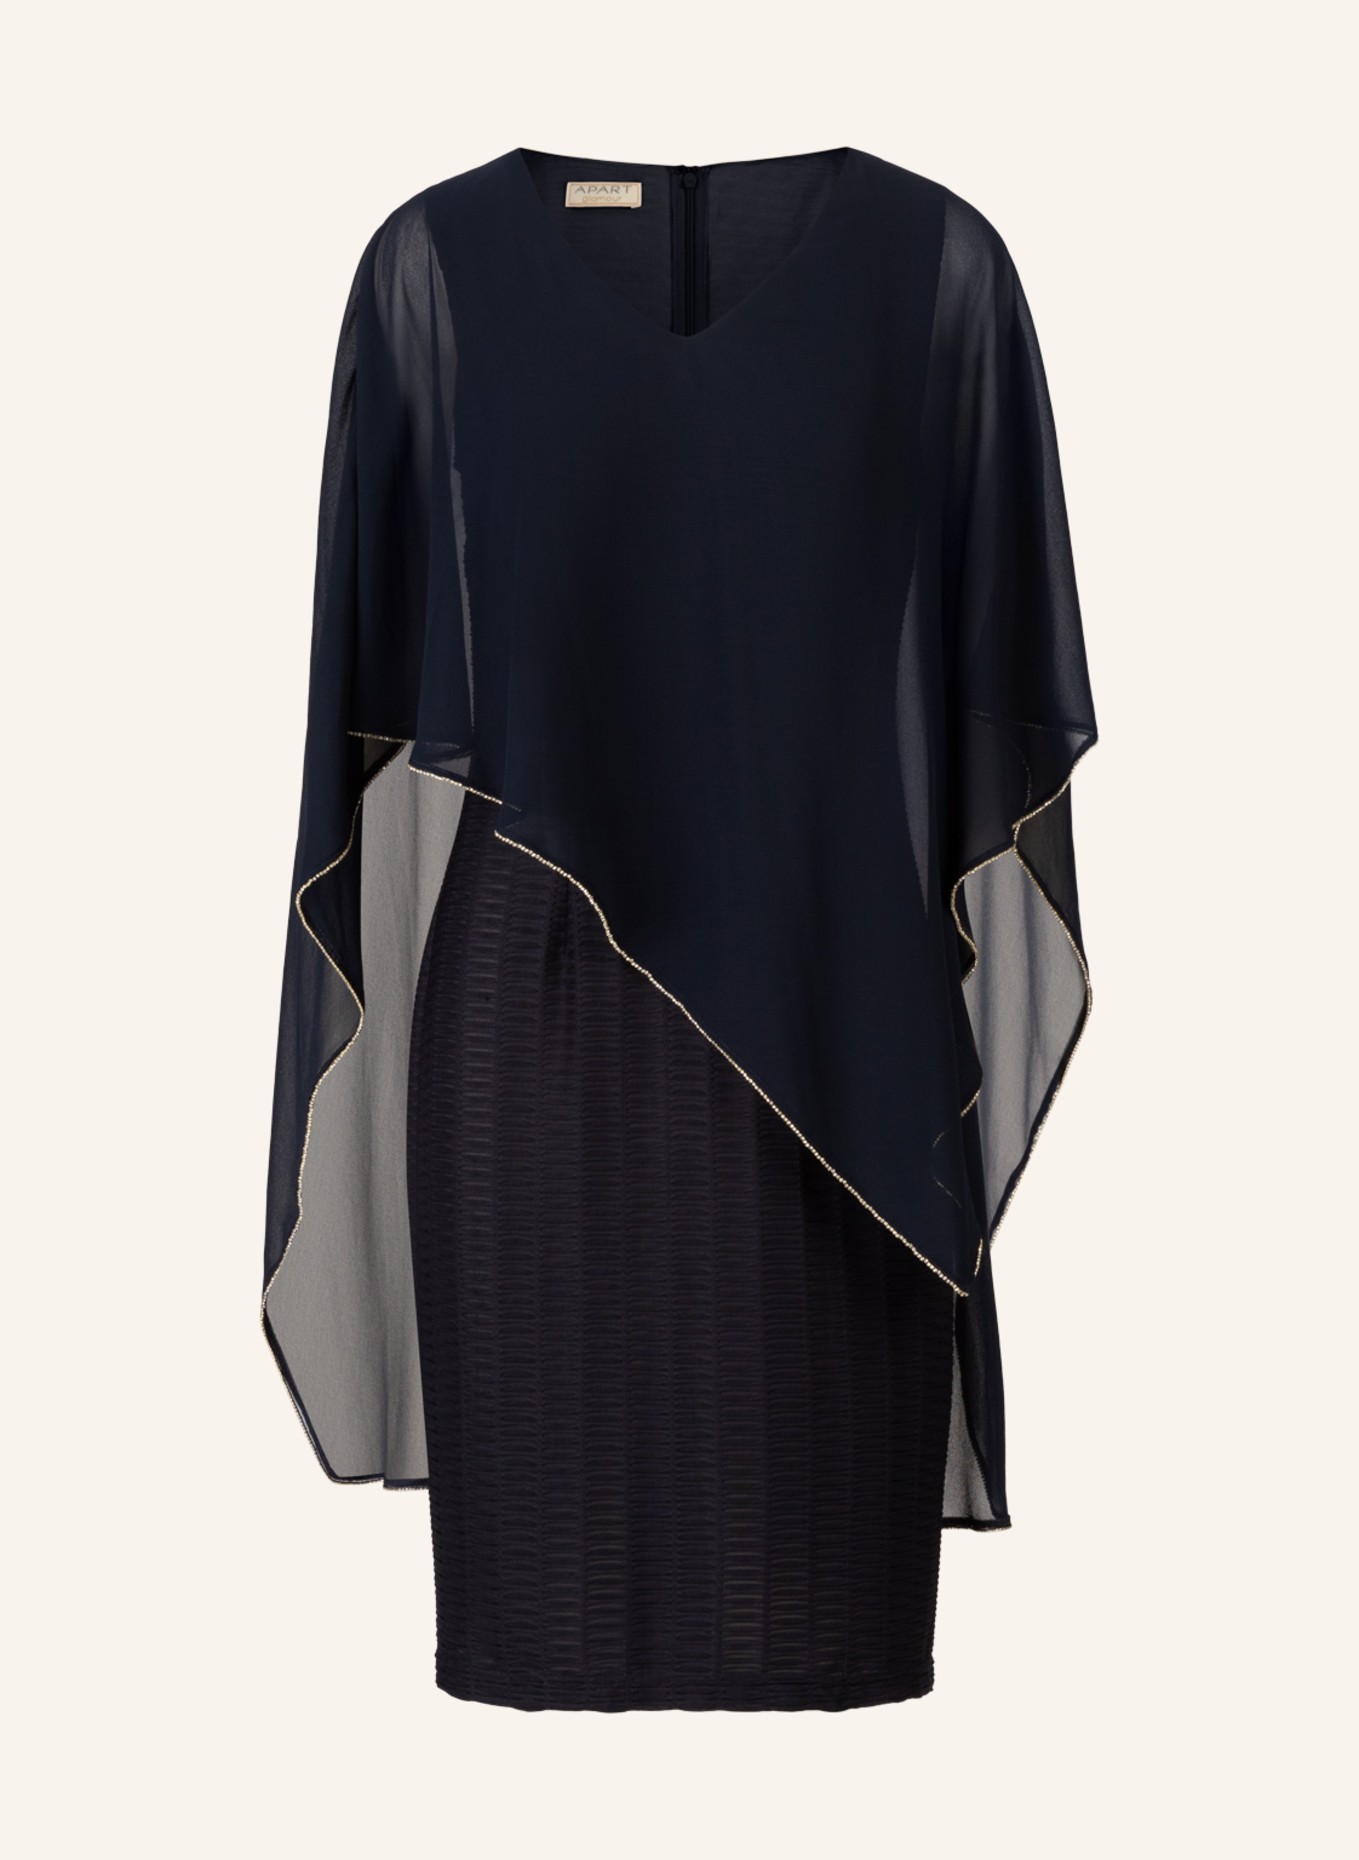 APART Jerseykleid mit Chiffoncape, Farbe: DUNKELBLAU (Bild 1)